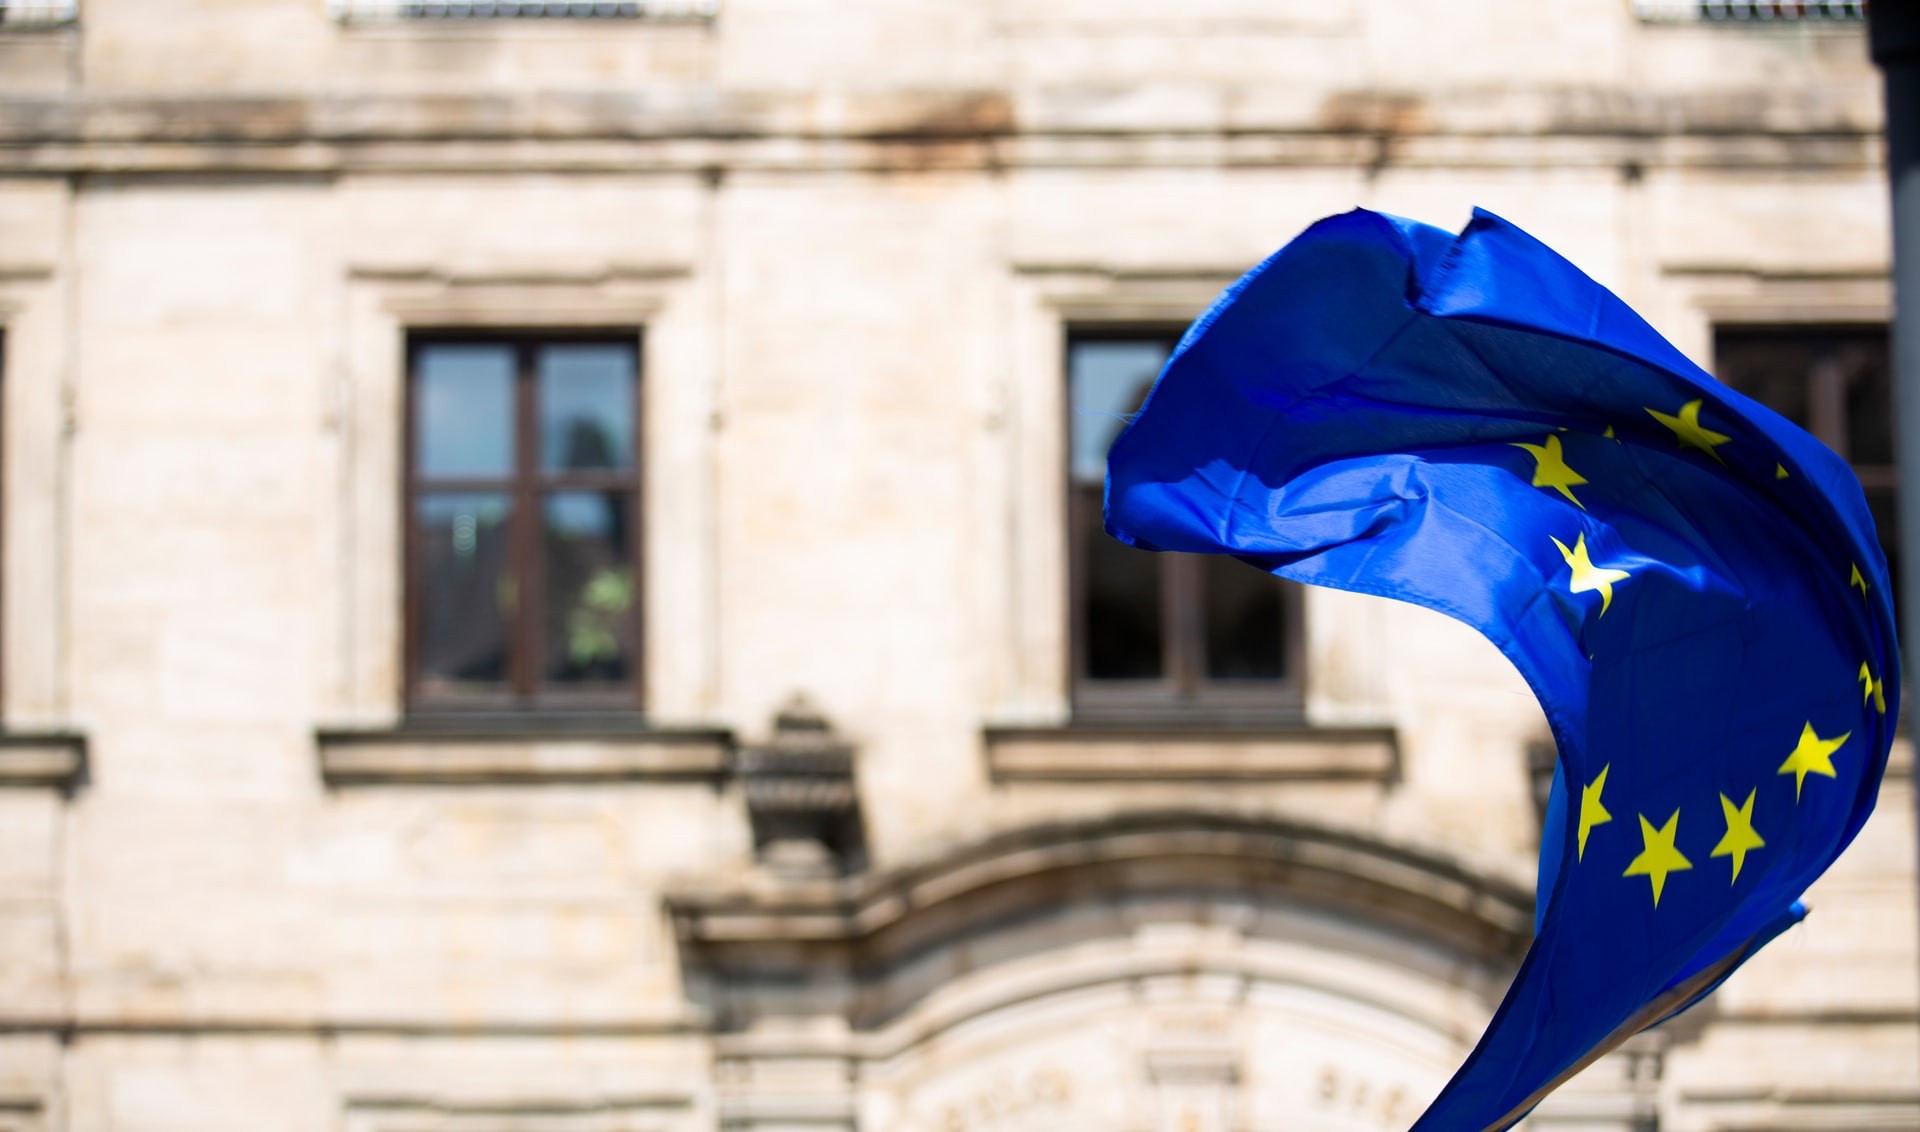 Bandeira da União Europeia. Photo by Markus Spiske on Unsplash.